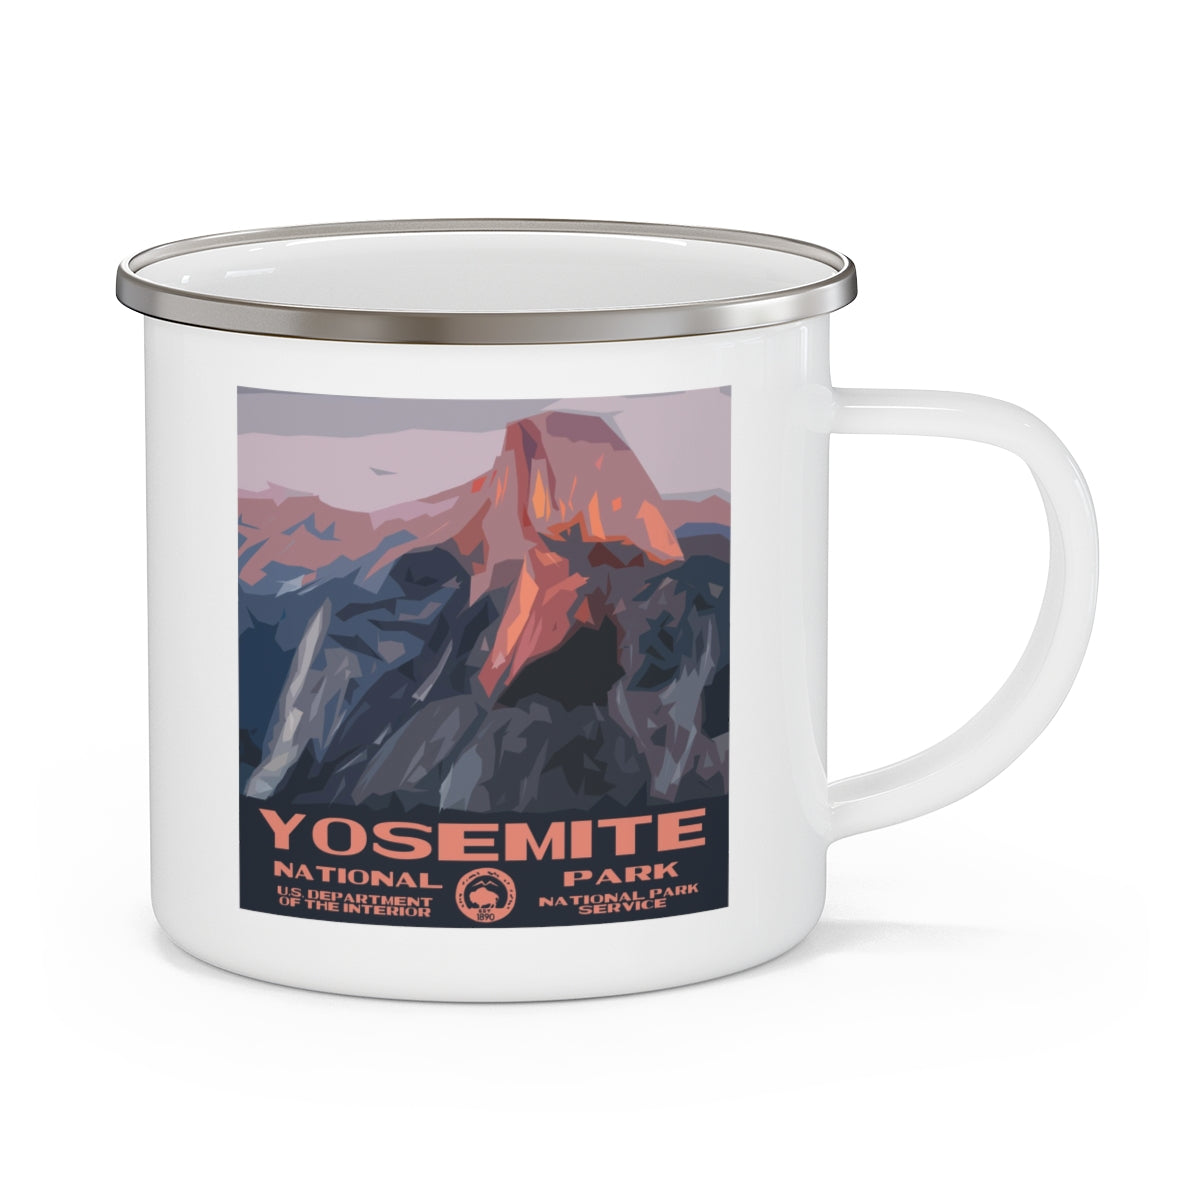 Yosemite National Park Enamel Camping Mug